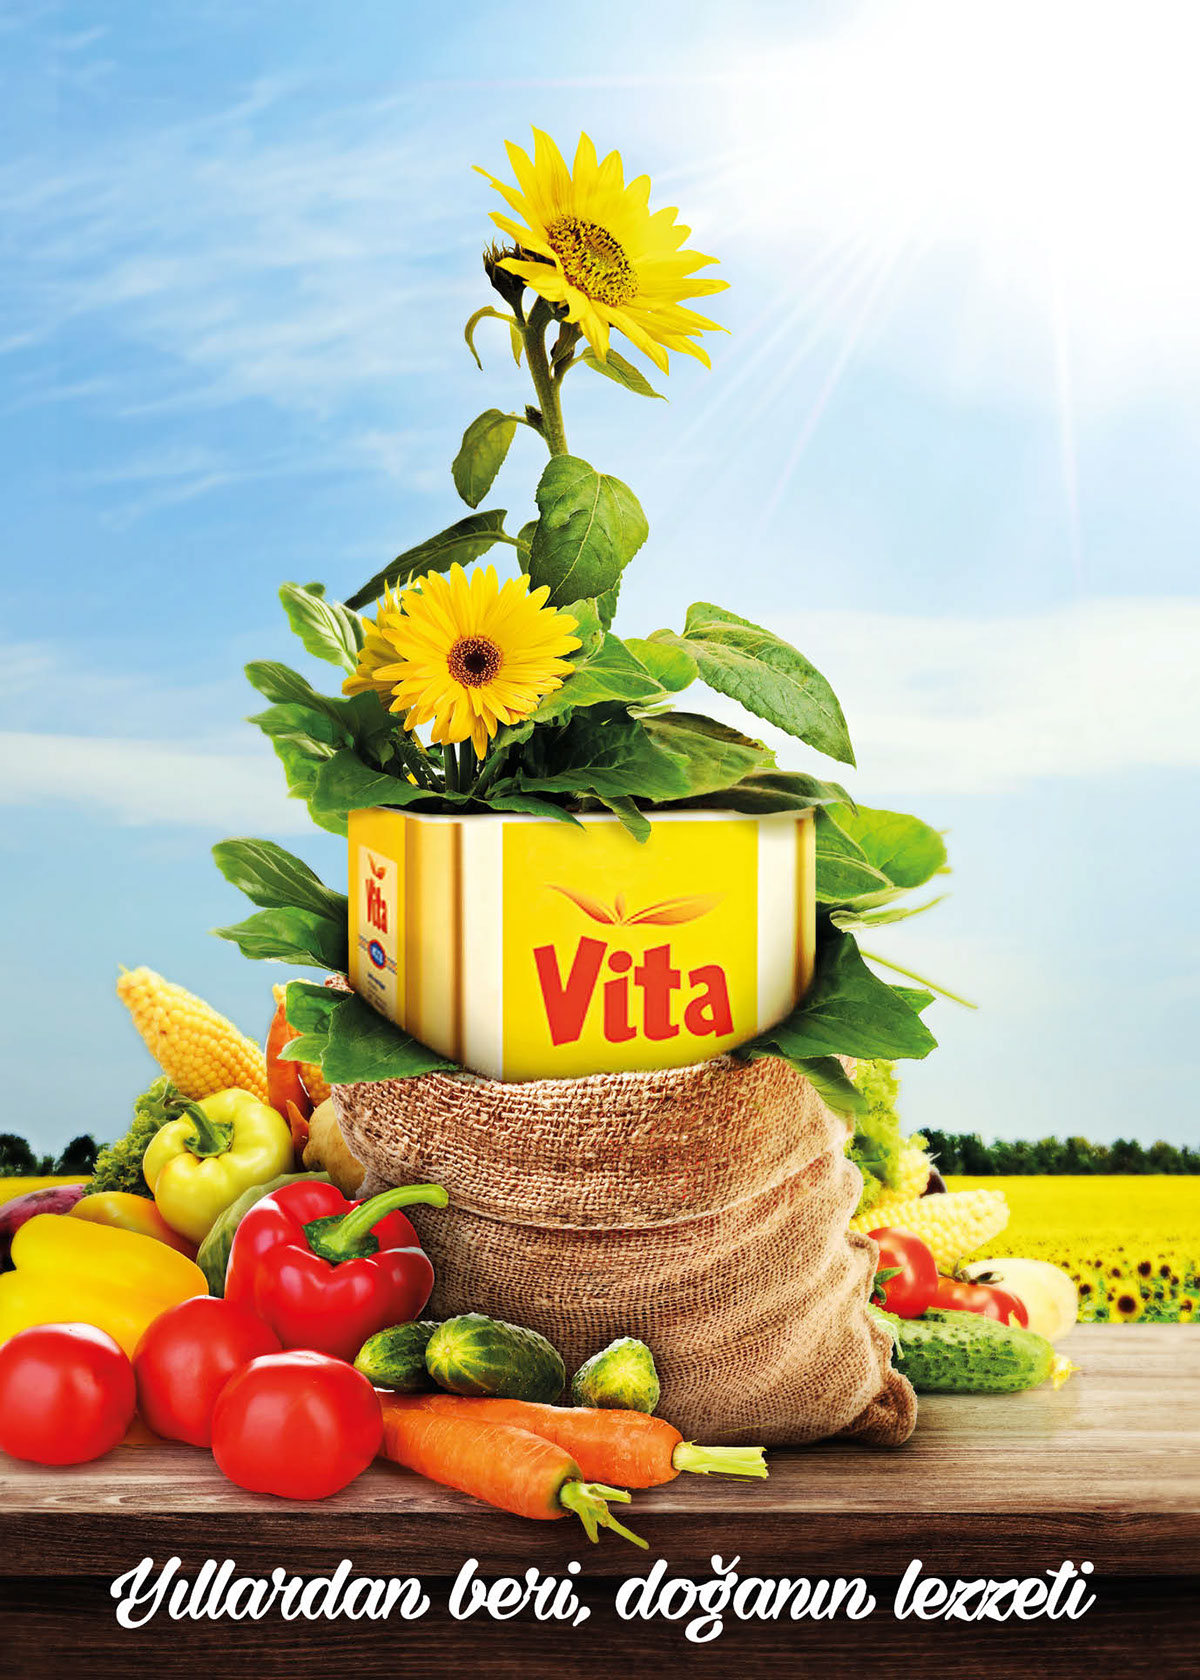 vita sunflower oil newspaper